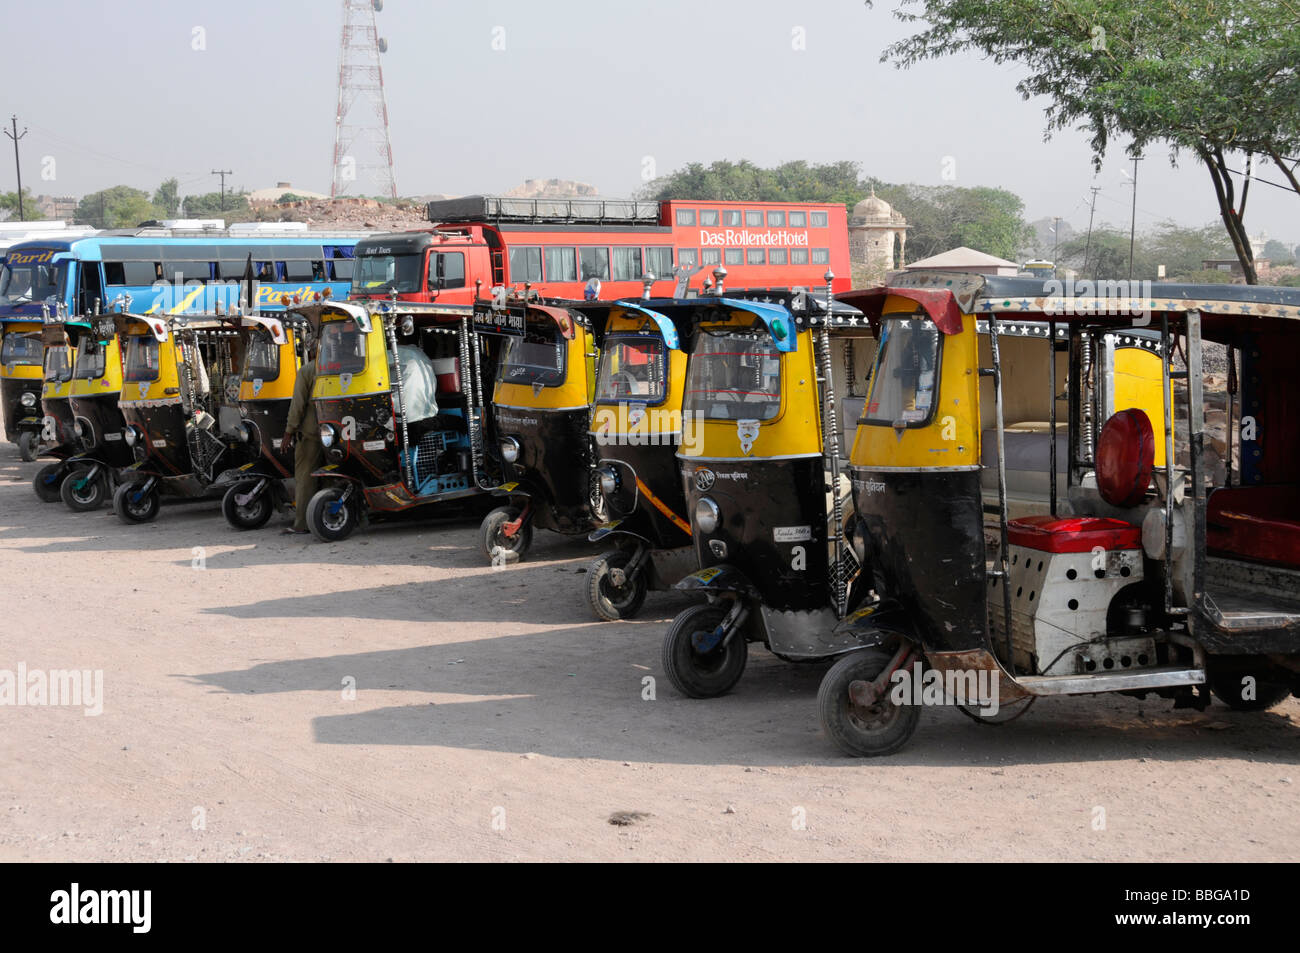 Indian taxi cabs, Jodhpur, Rajasthan, northern India, Asia Stock Photo